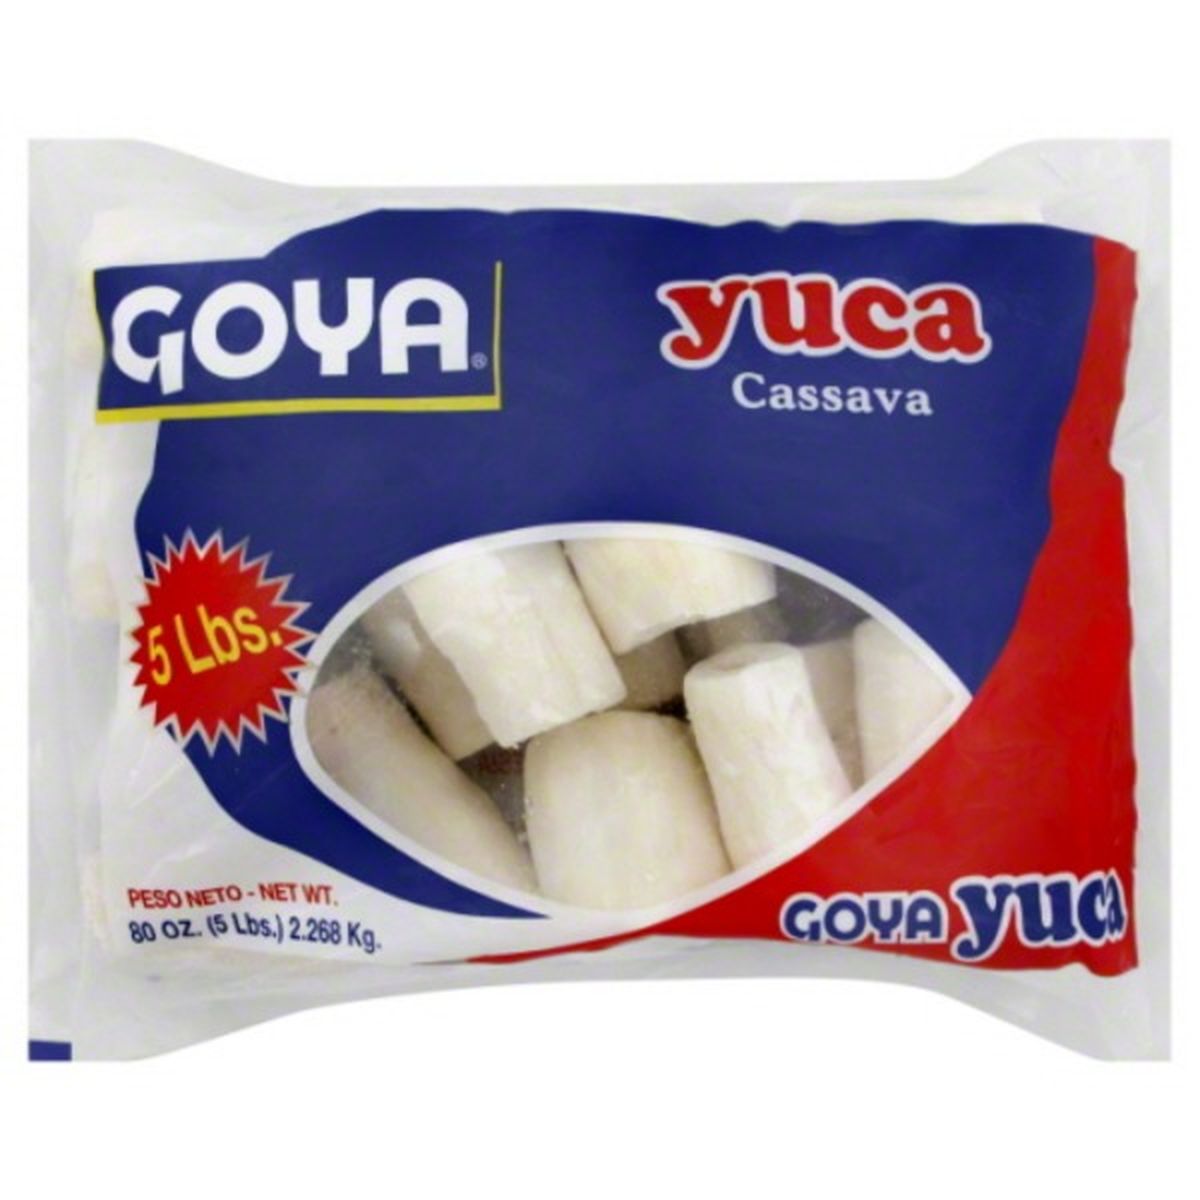 Calories in Goya Cassava, Yuca